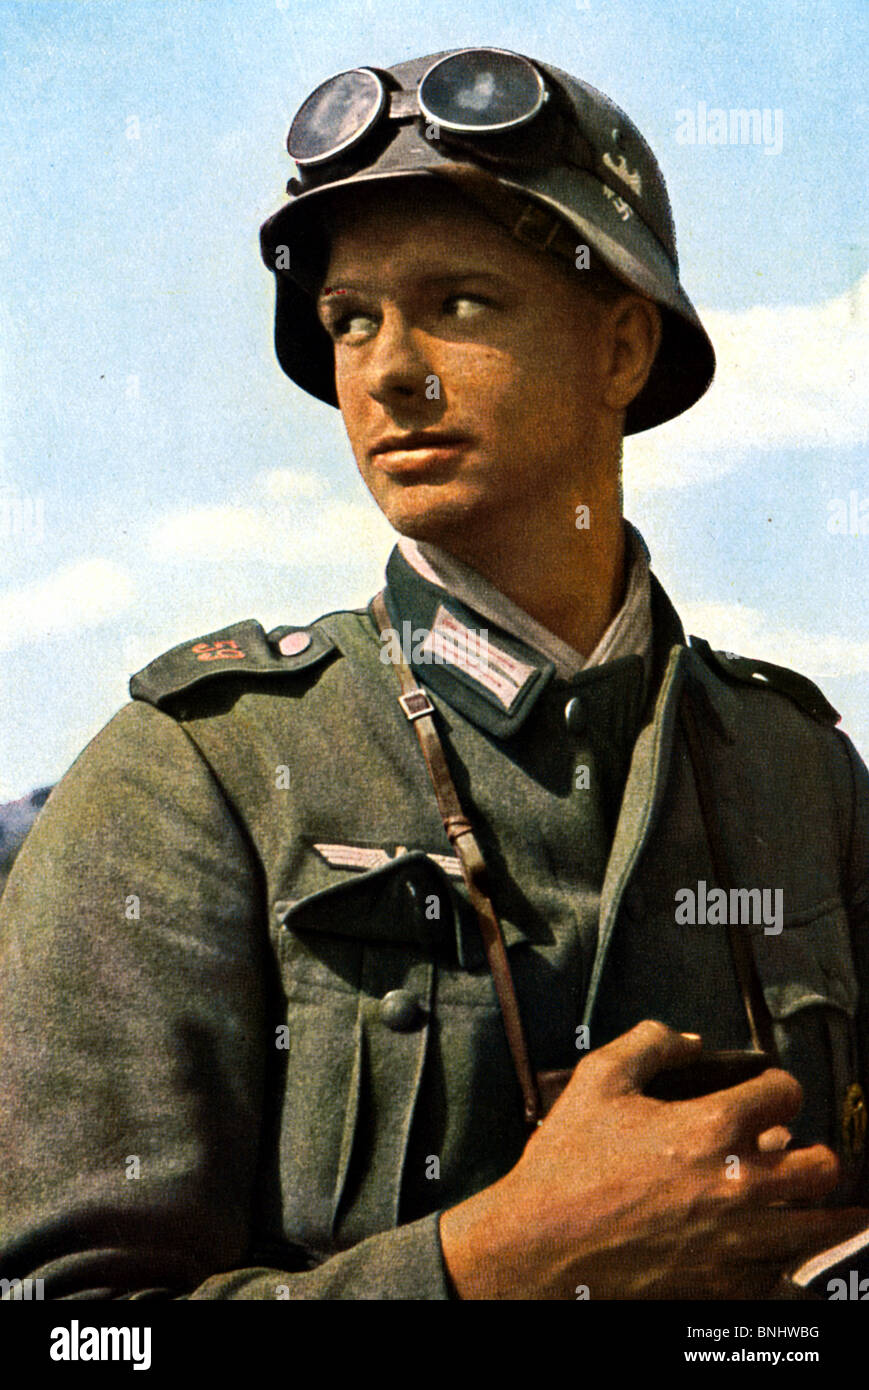 World War II Nazi Germany Soldier Man Portrait Wehrmacht between 1939-1940 Second World War WW2 war military army history Stock Photo